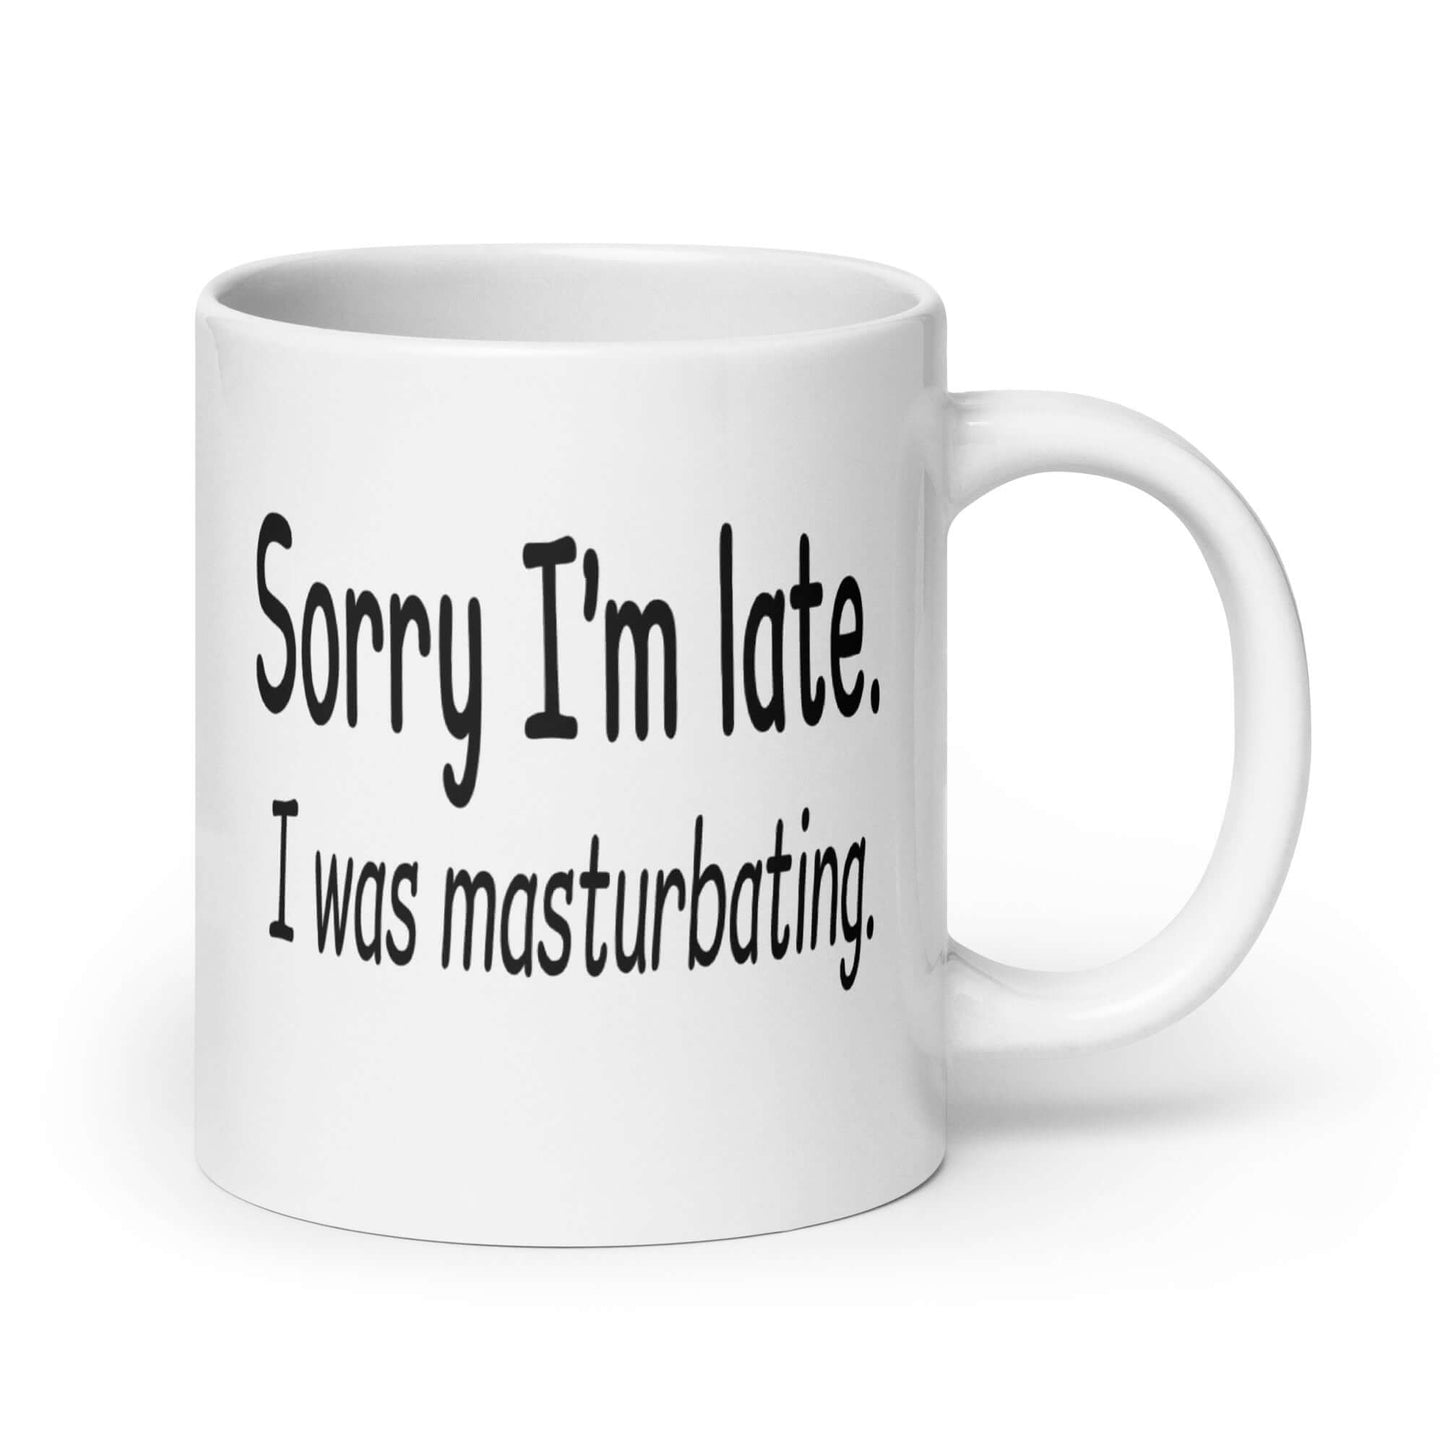 Sorry I'm late, I was masturbating funny sexual humor mug